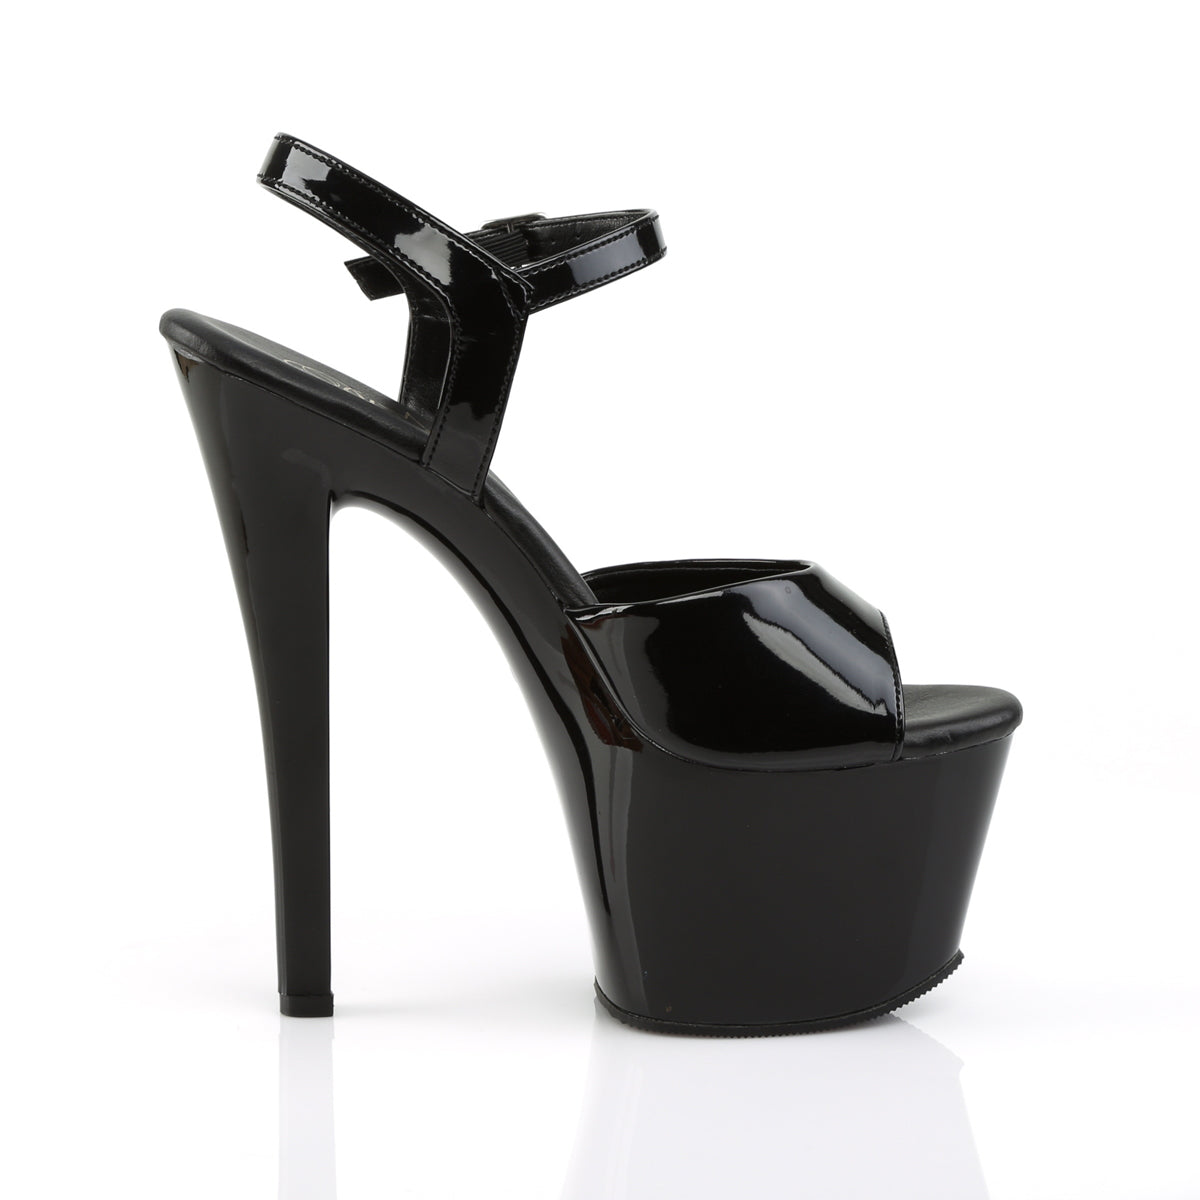 SKY-309VL Pleaser 7" Heel Black Patent Pole Dancing Platform-Pleaser- Sexy Shoes Fetish Heels